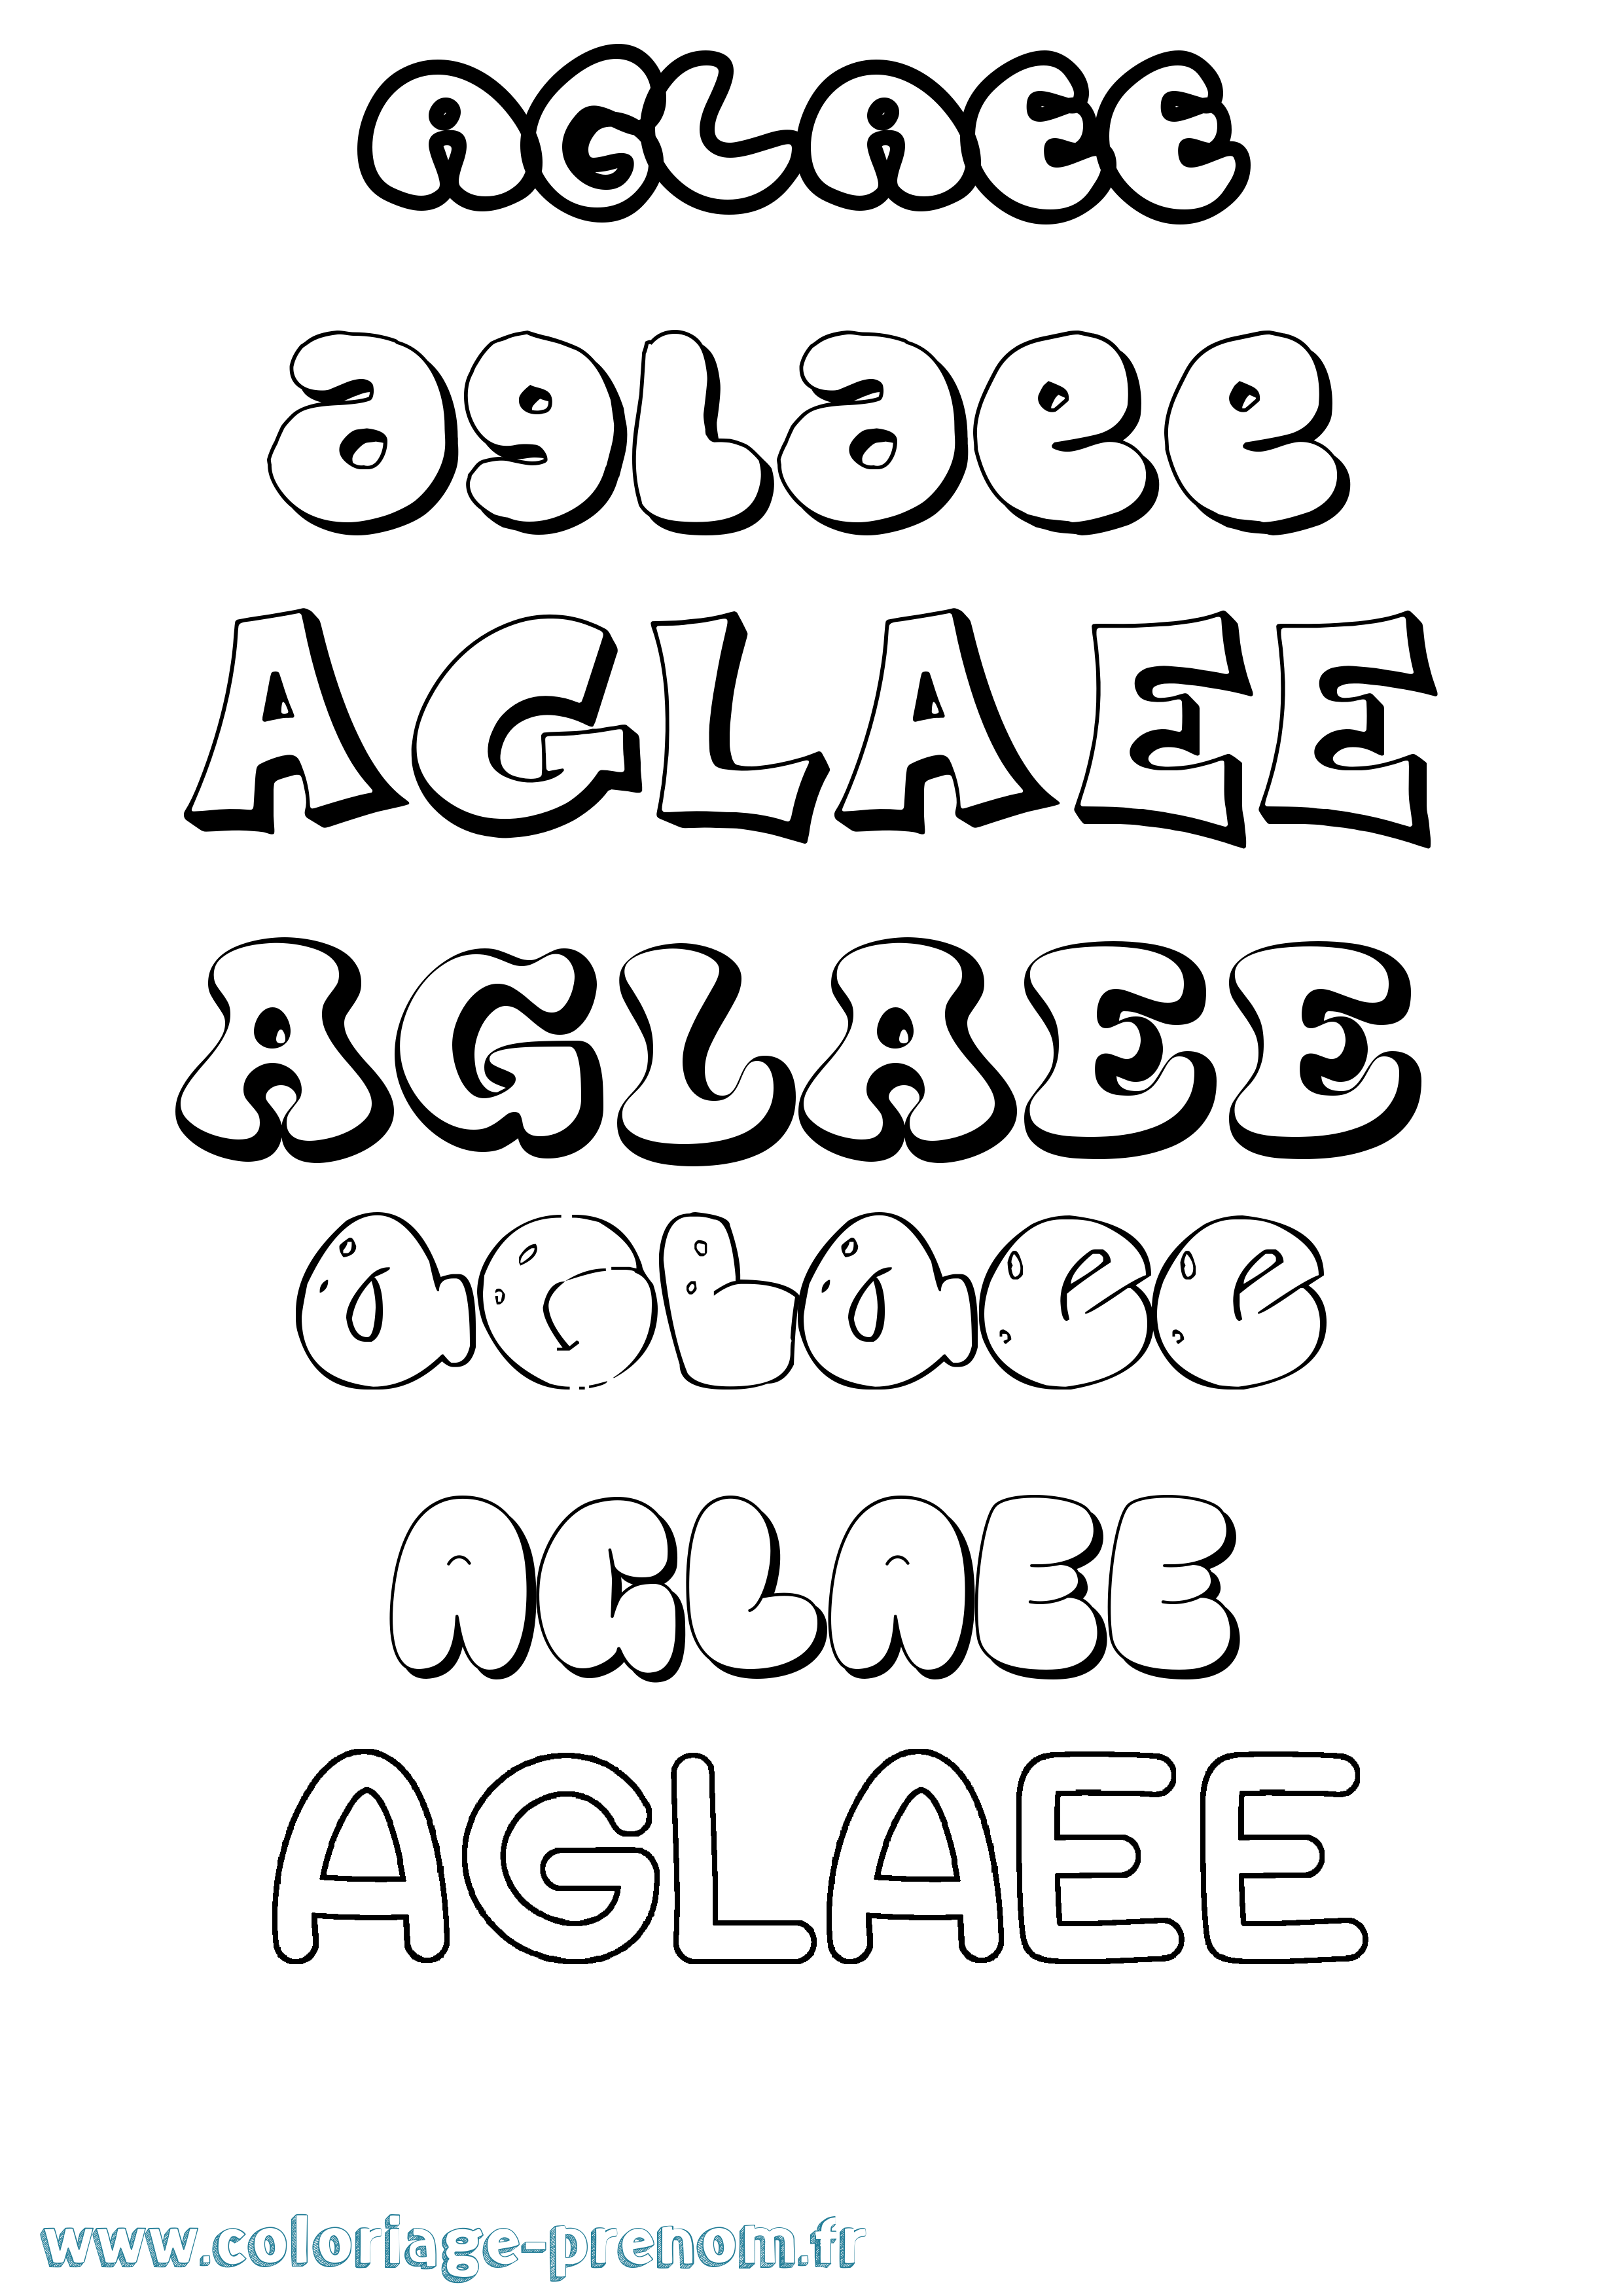 Coloriage prénom Aglaee Bubble